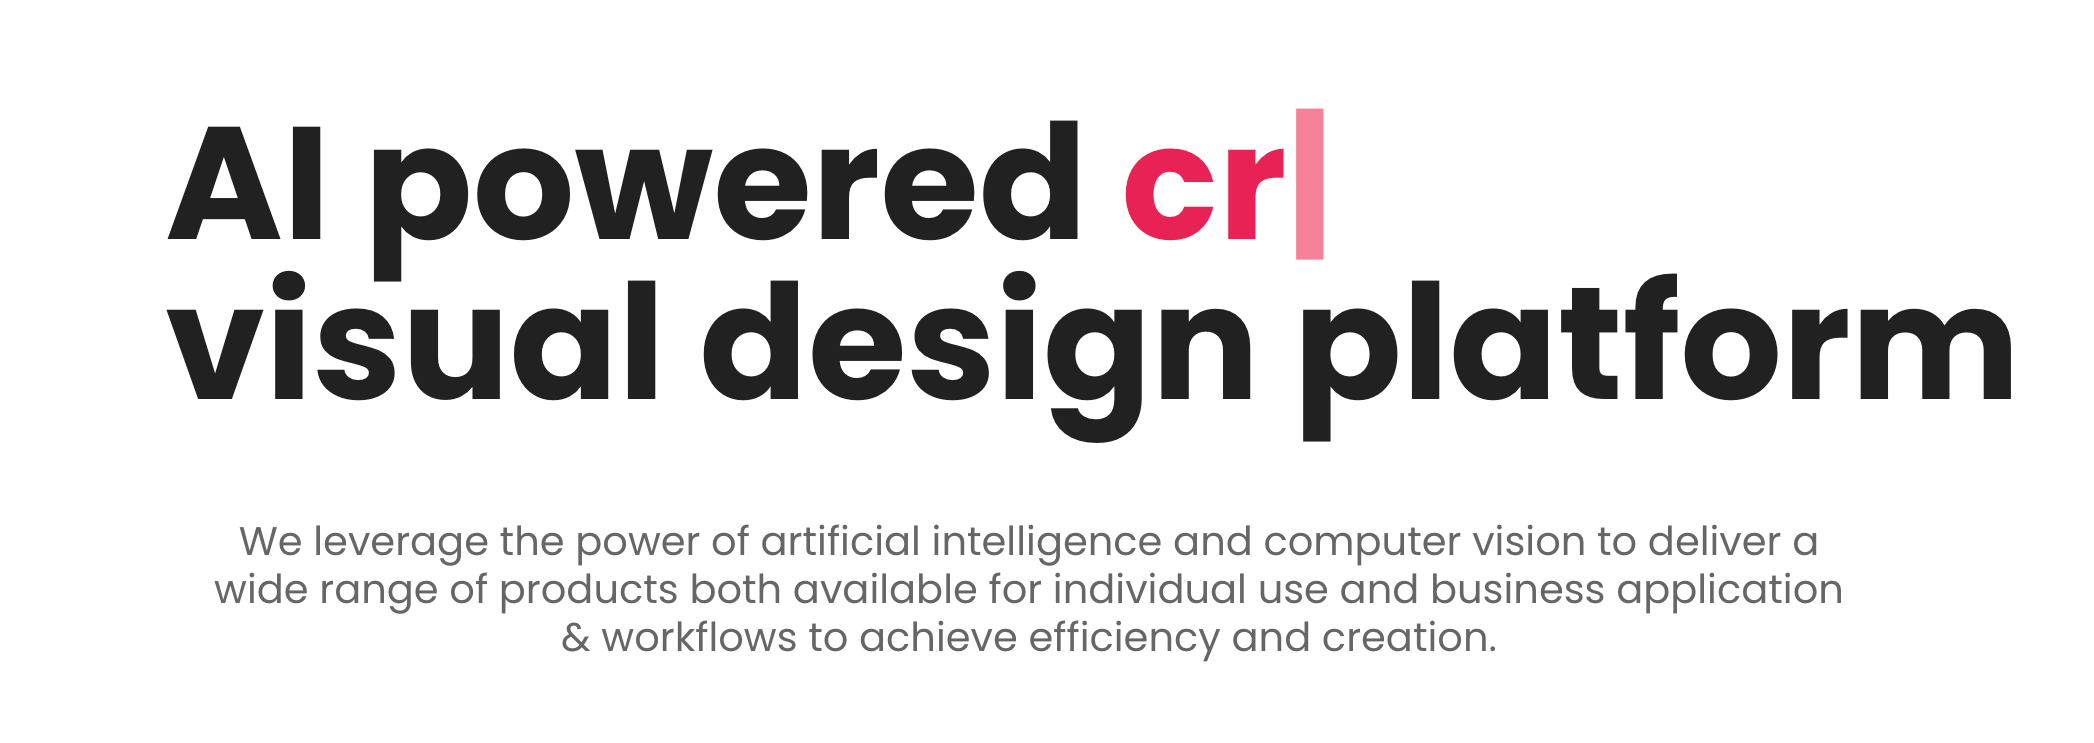 Cutout Pro: AI powered visual design platform